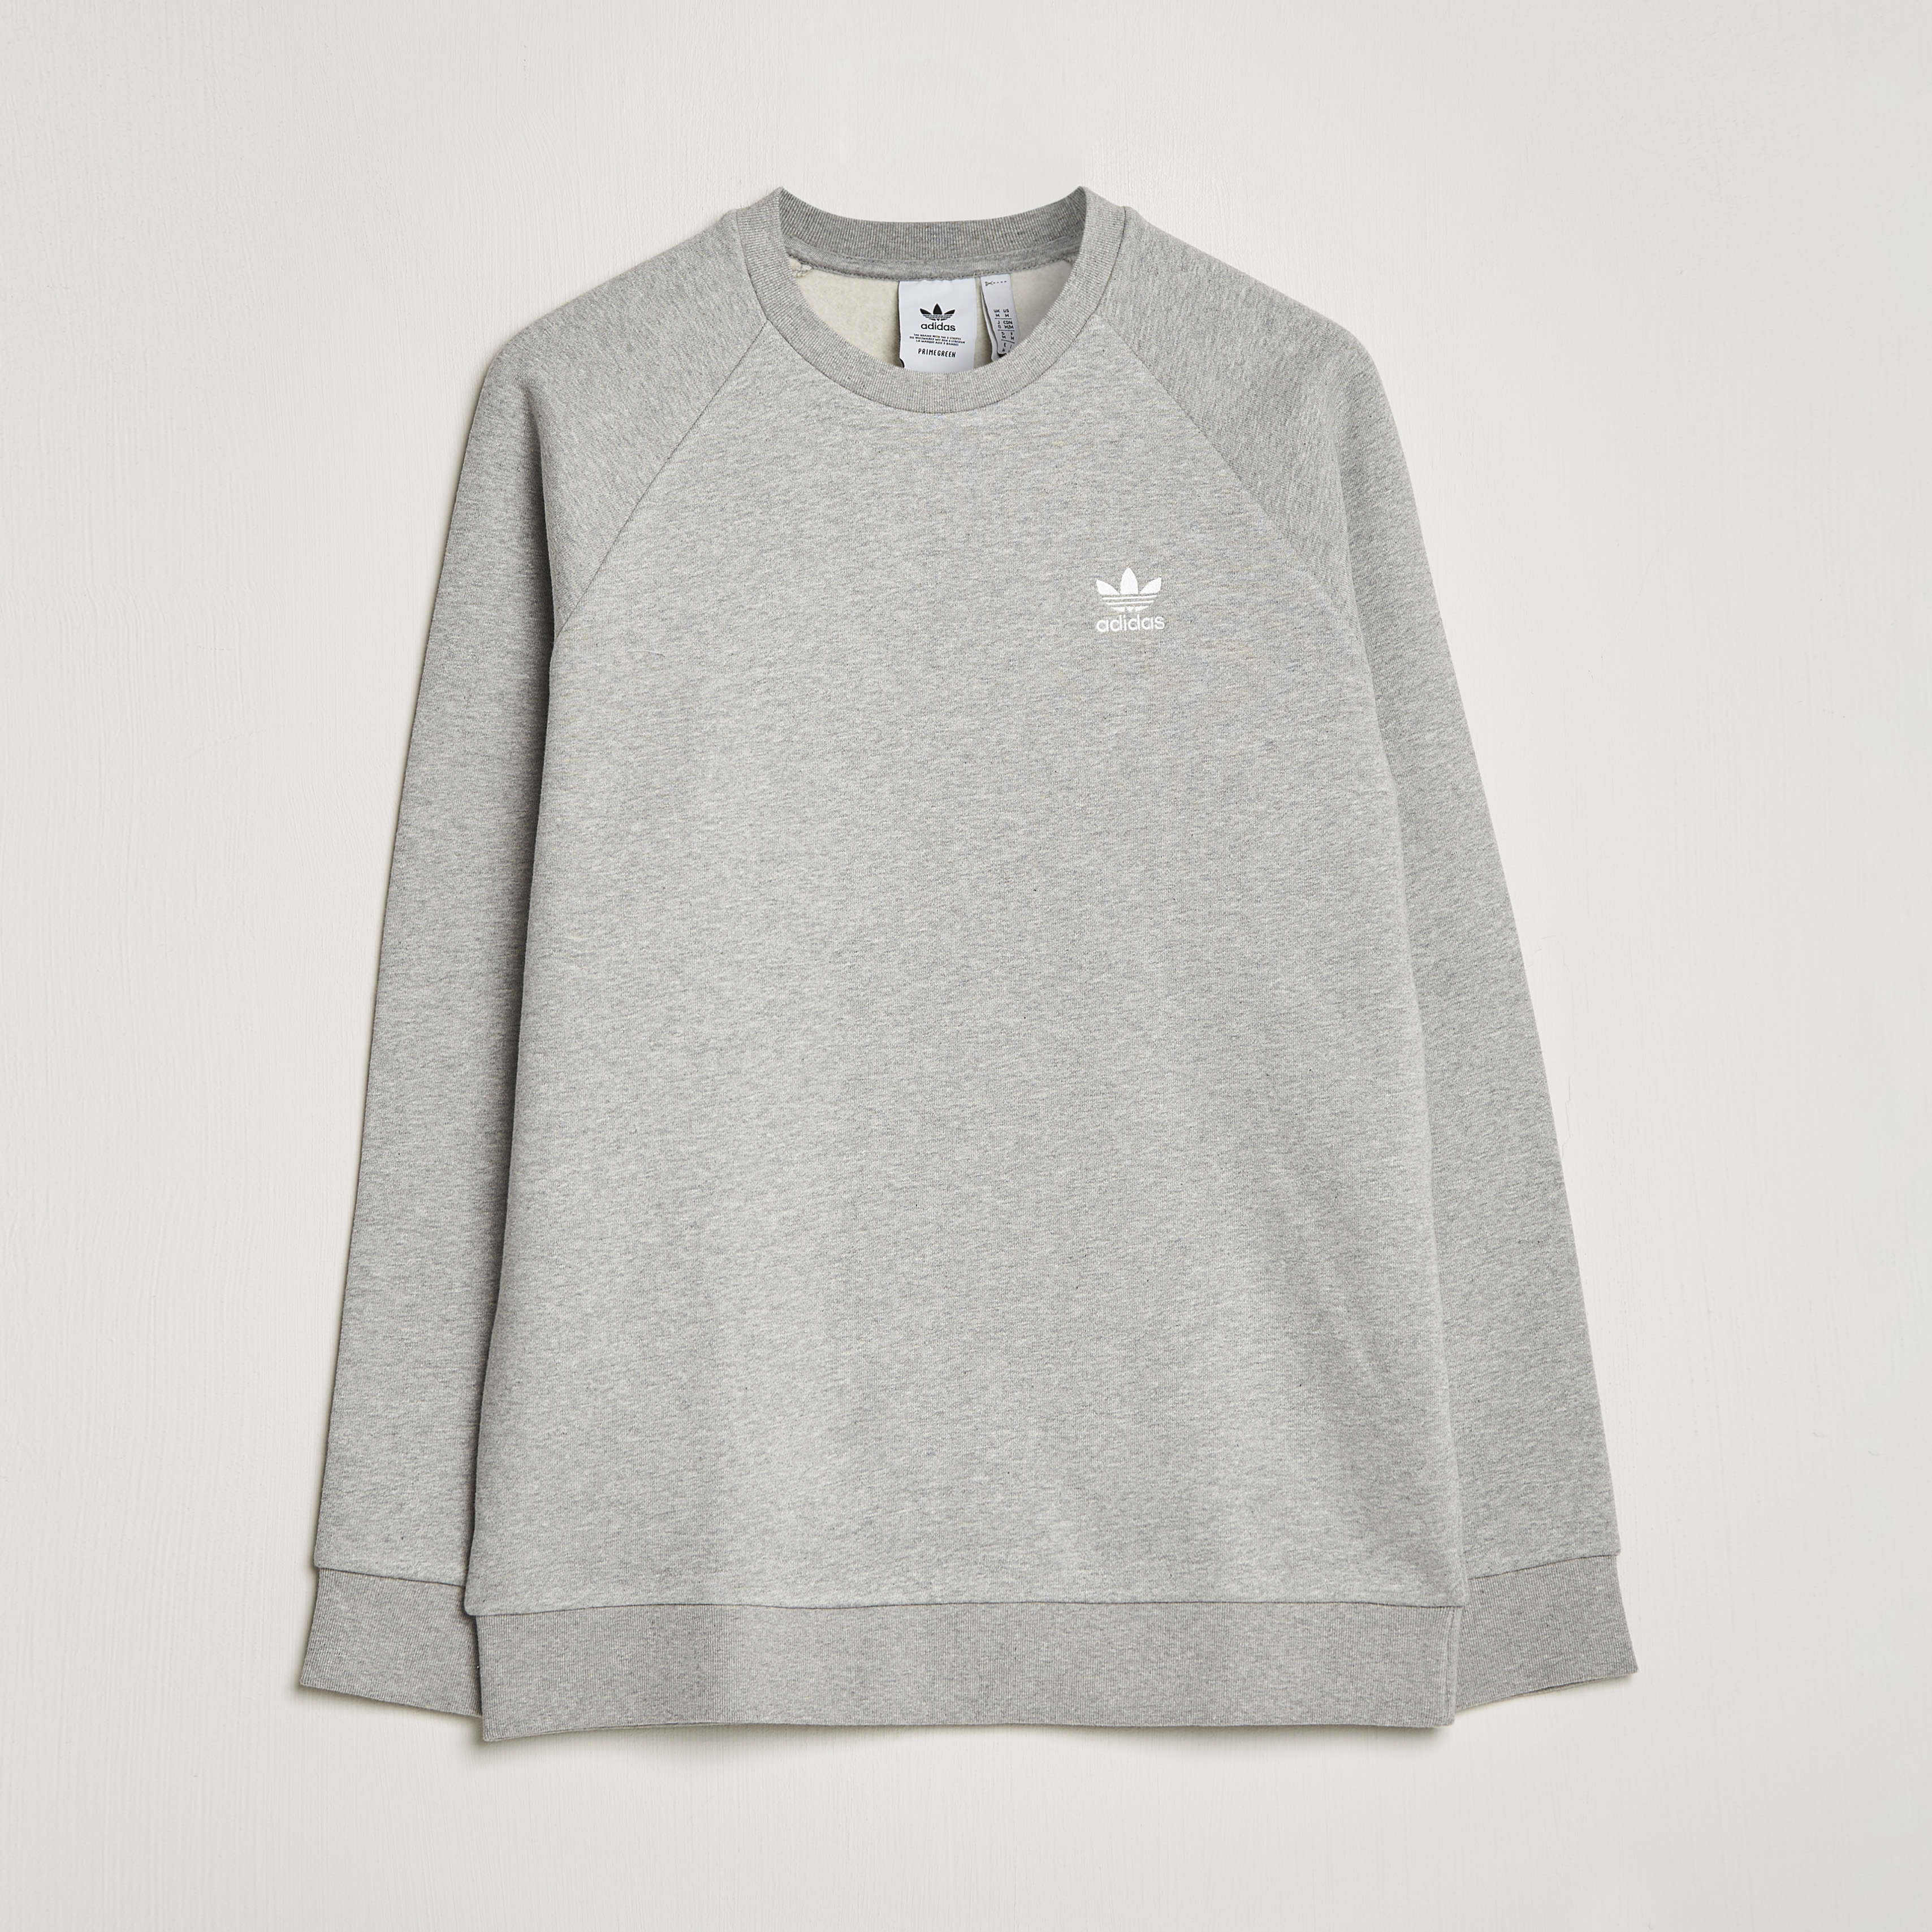 adidas Originals Essential Trefoil Sweatshirt at Grey